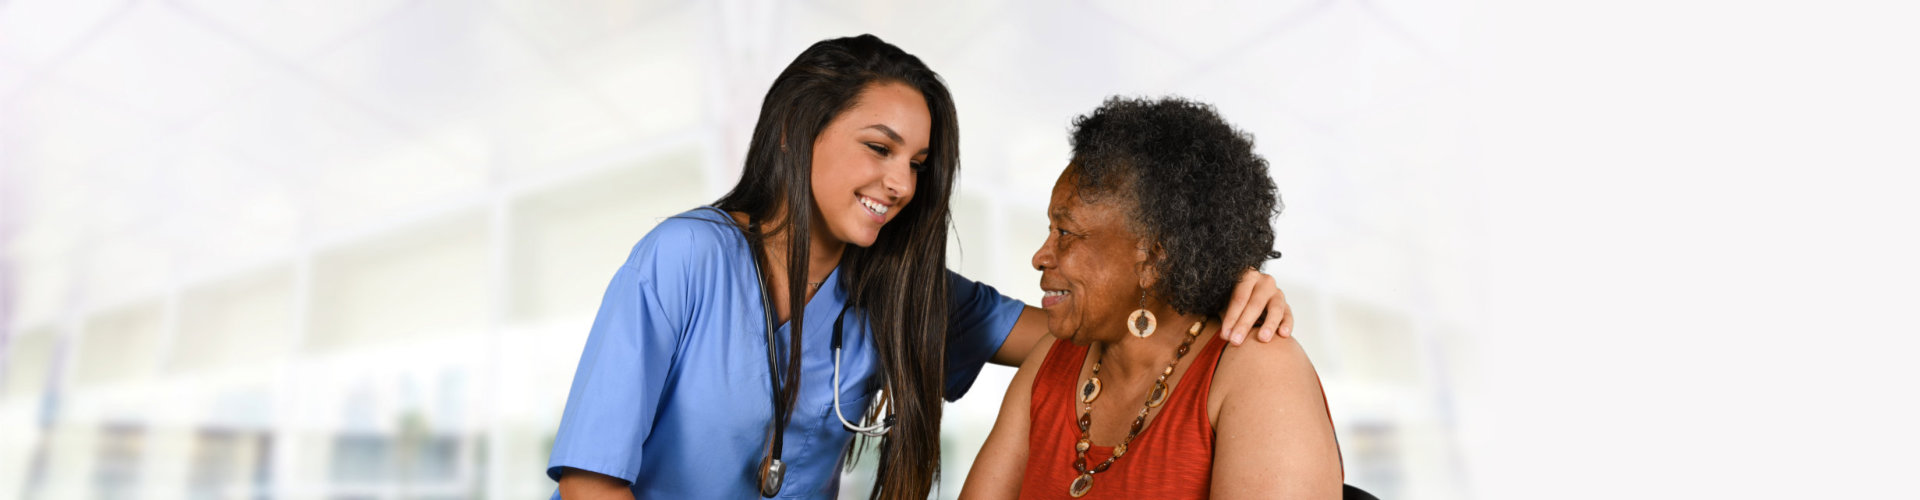 Health care worker helping an elderly woman